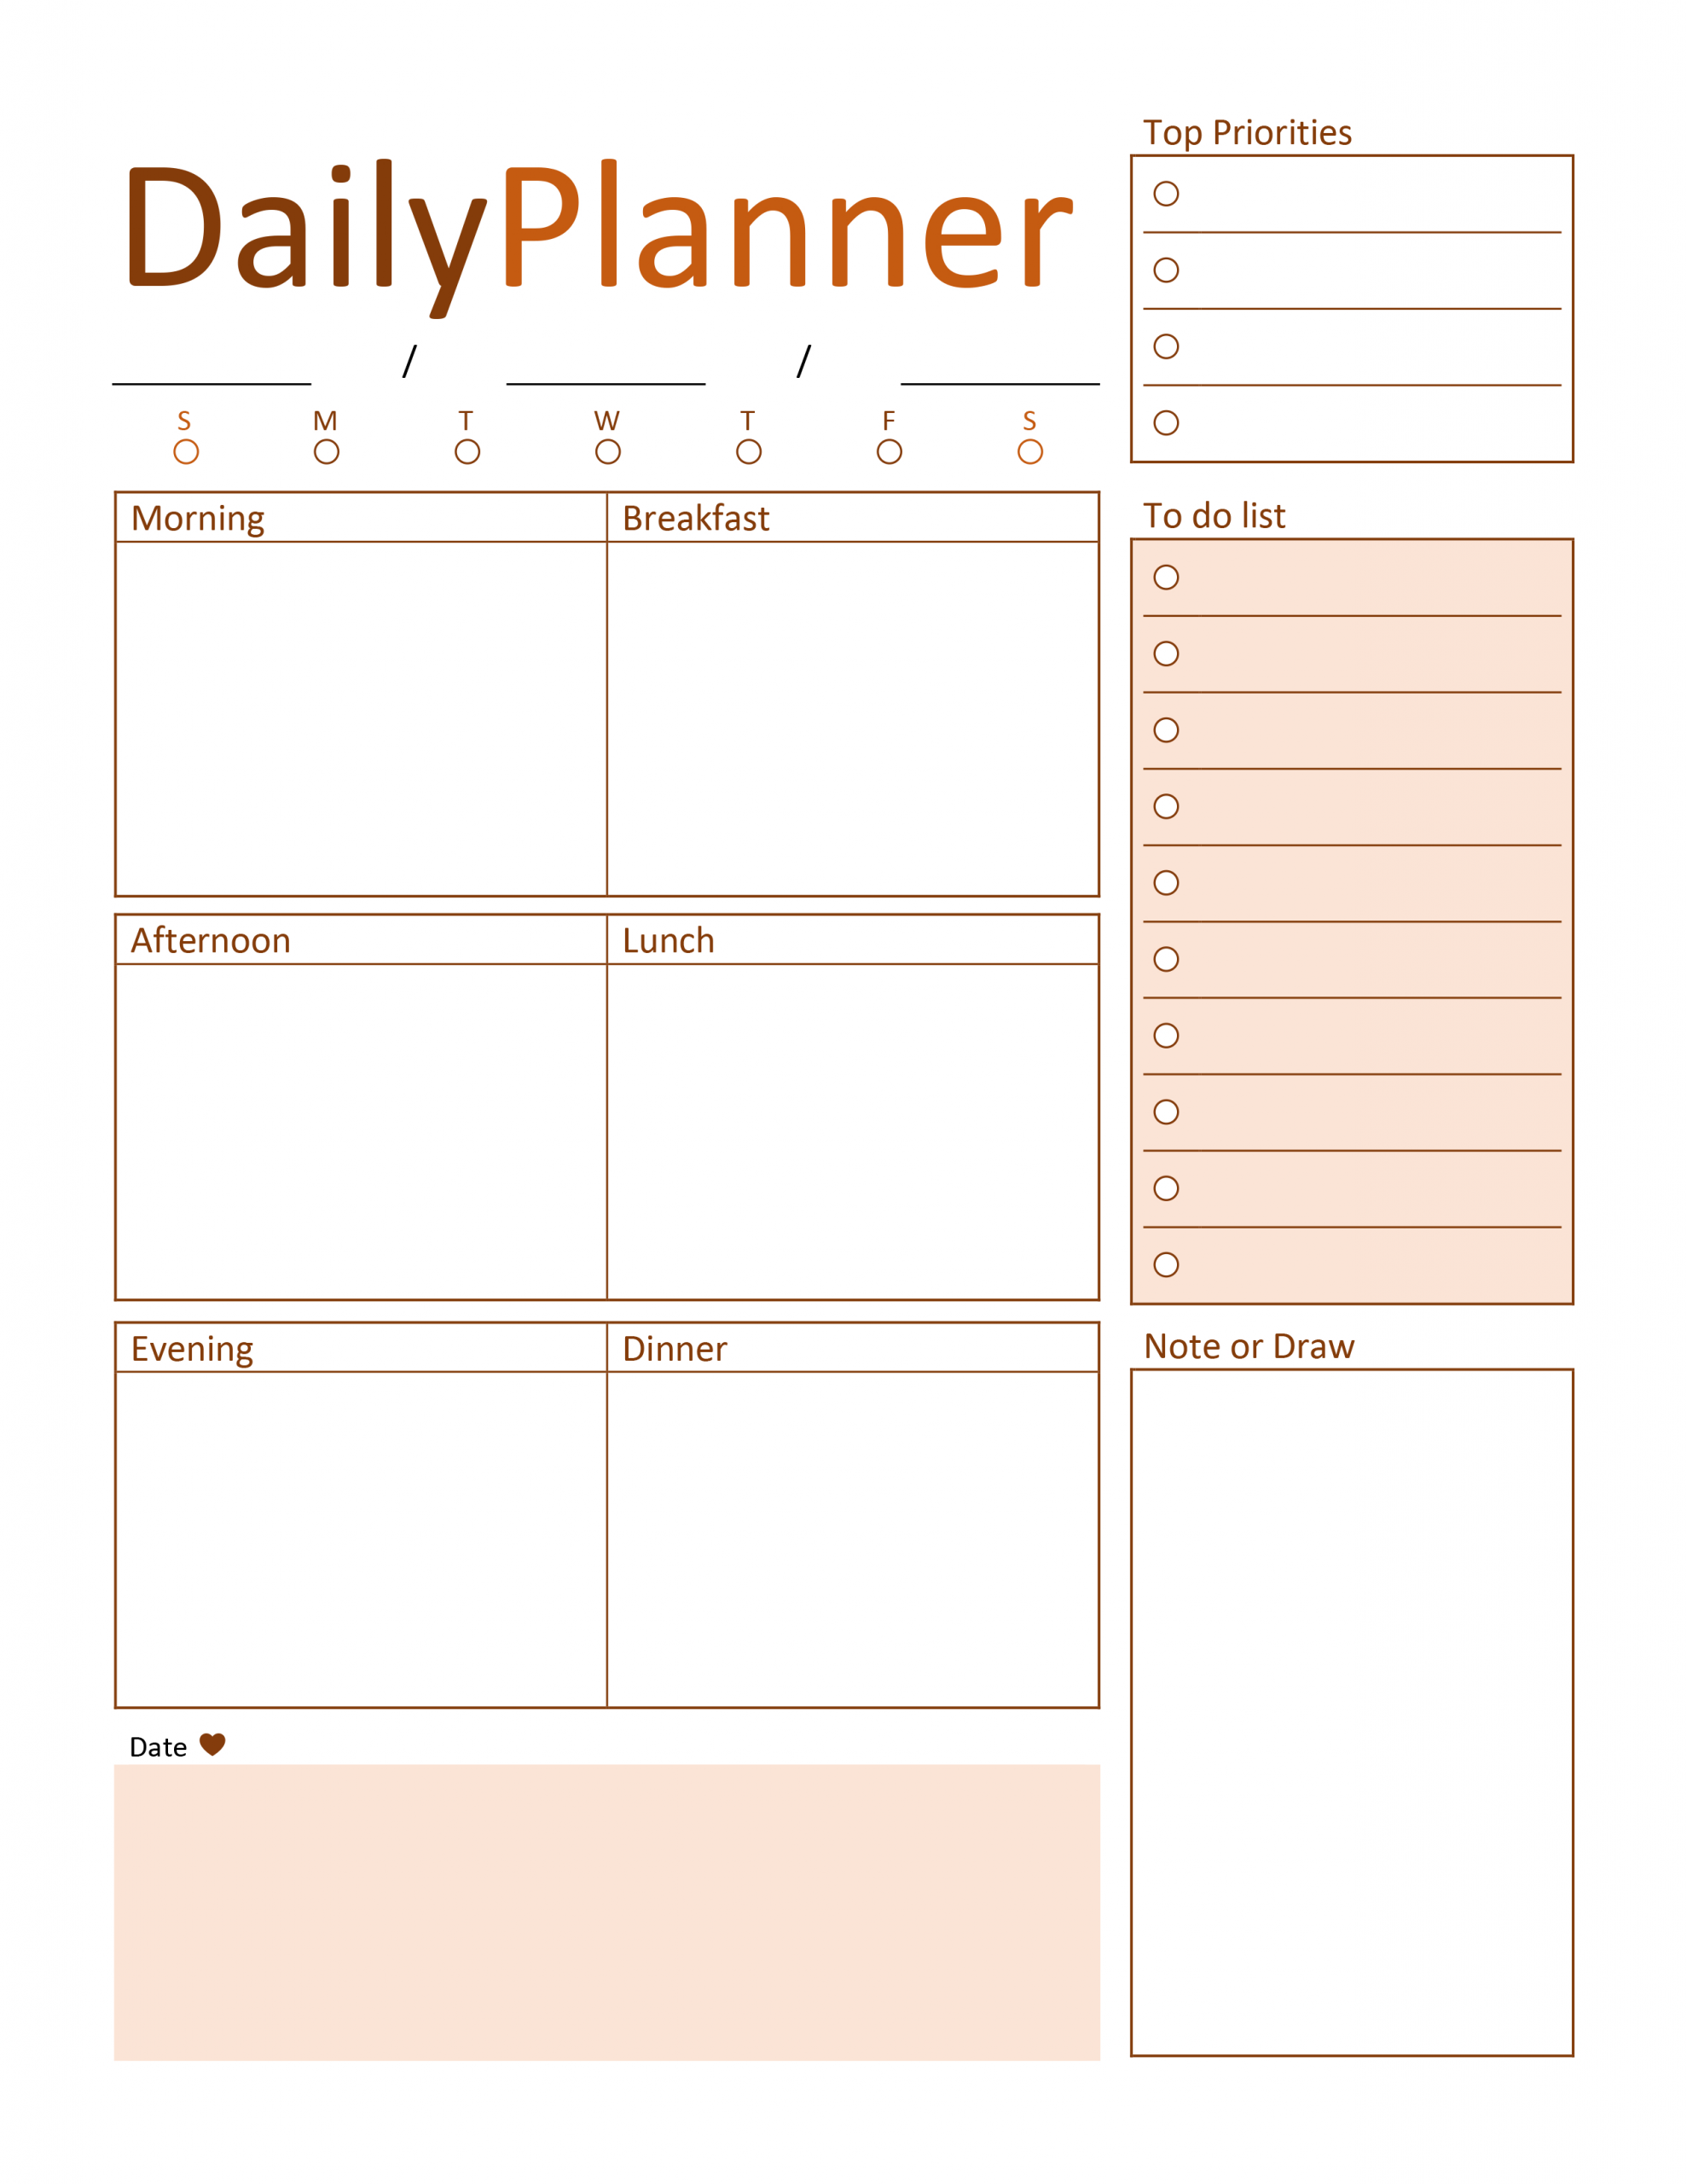 Daily Planner Free Calendar Su